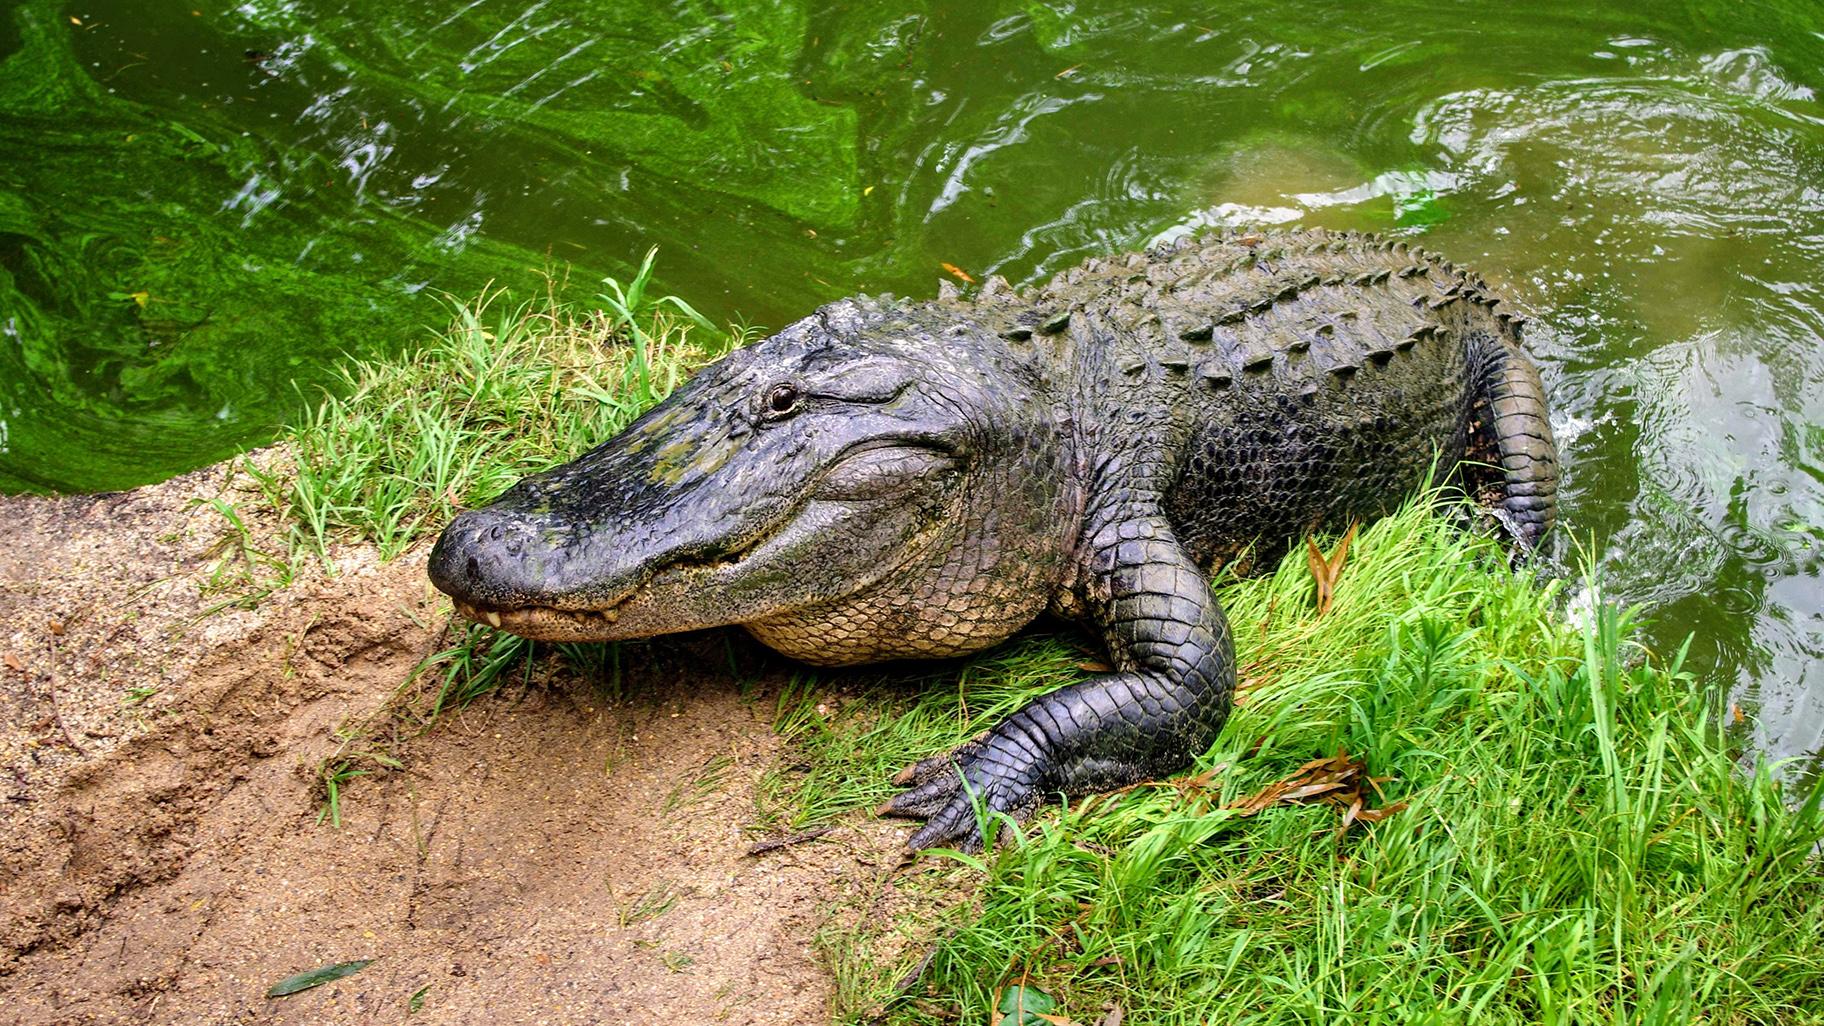 Spiritual Biblical Meaning of an Alligator in a Dream